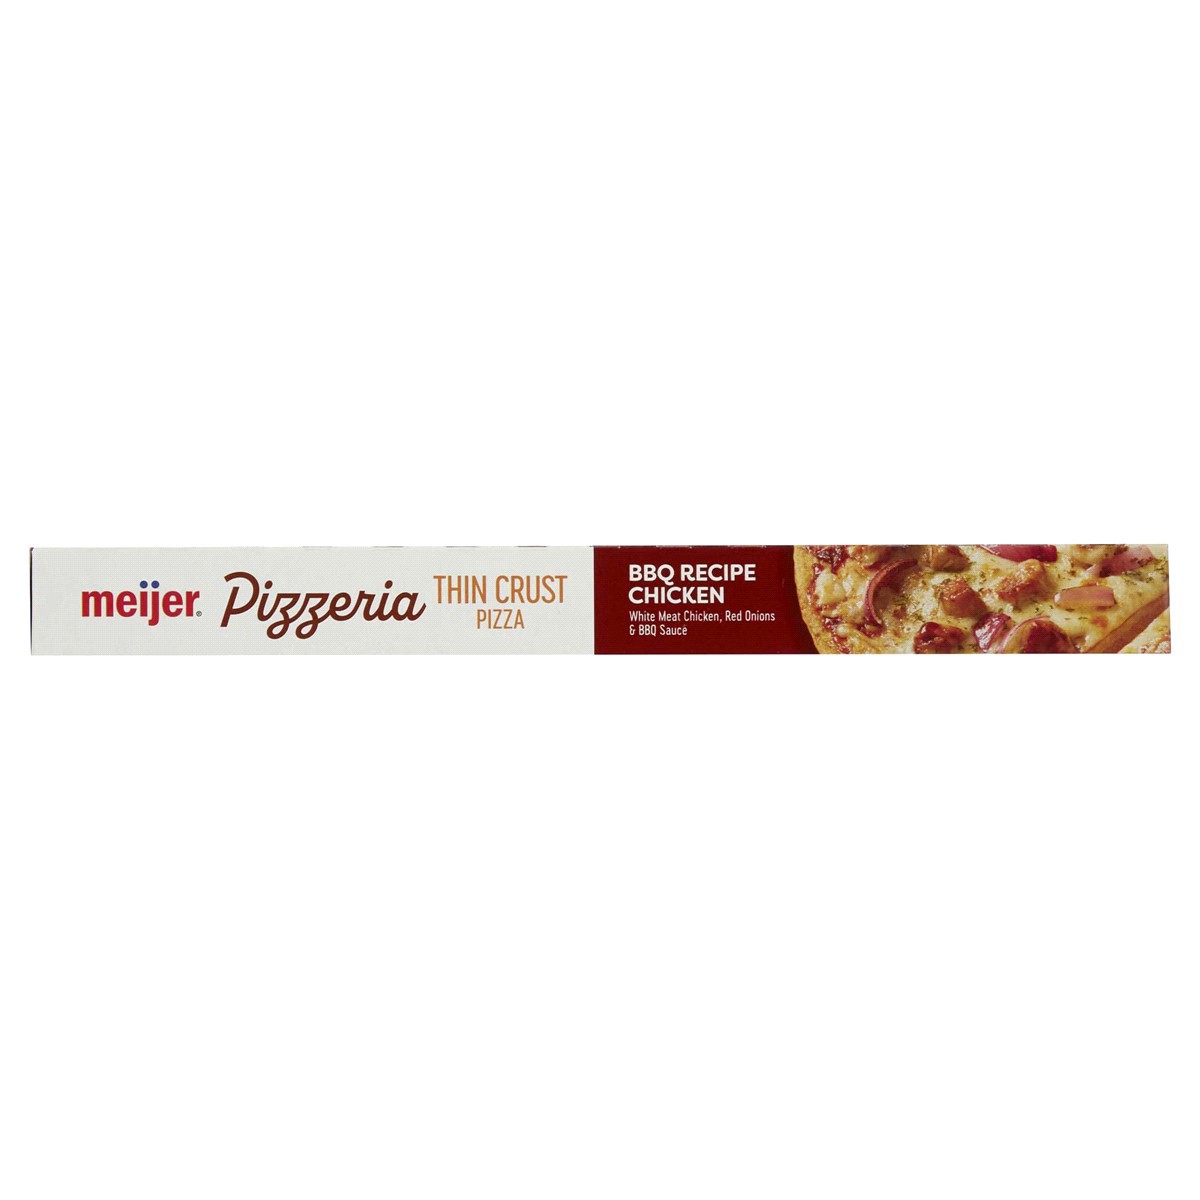 slide 13 of 29, Meijer Pizzeria Thin Crust BBQ Recipe Chicken Pizza, 17.96 oz